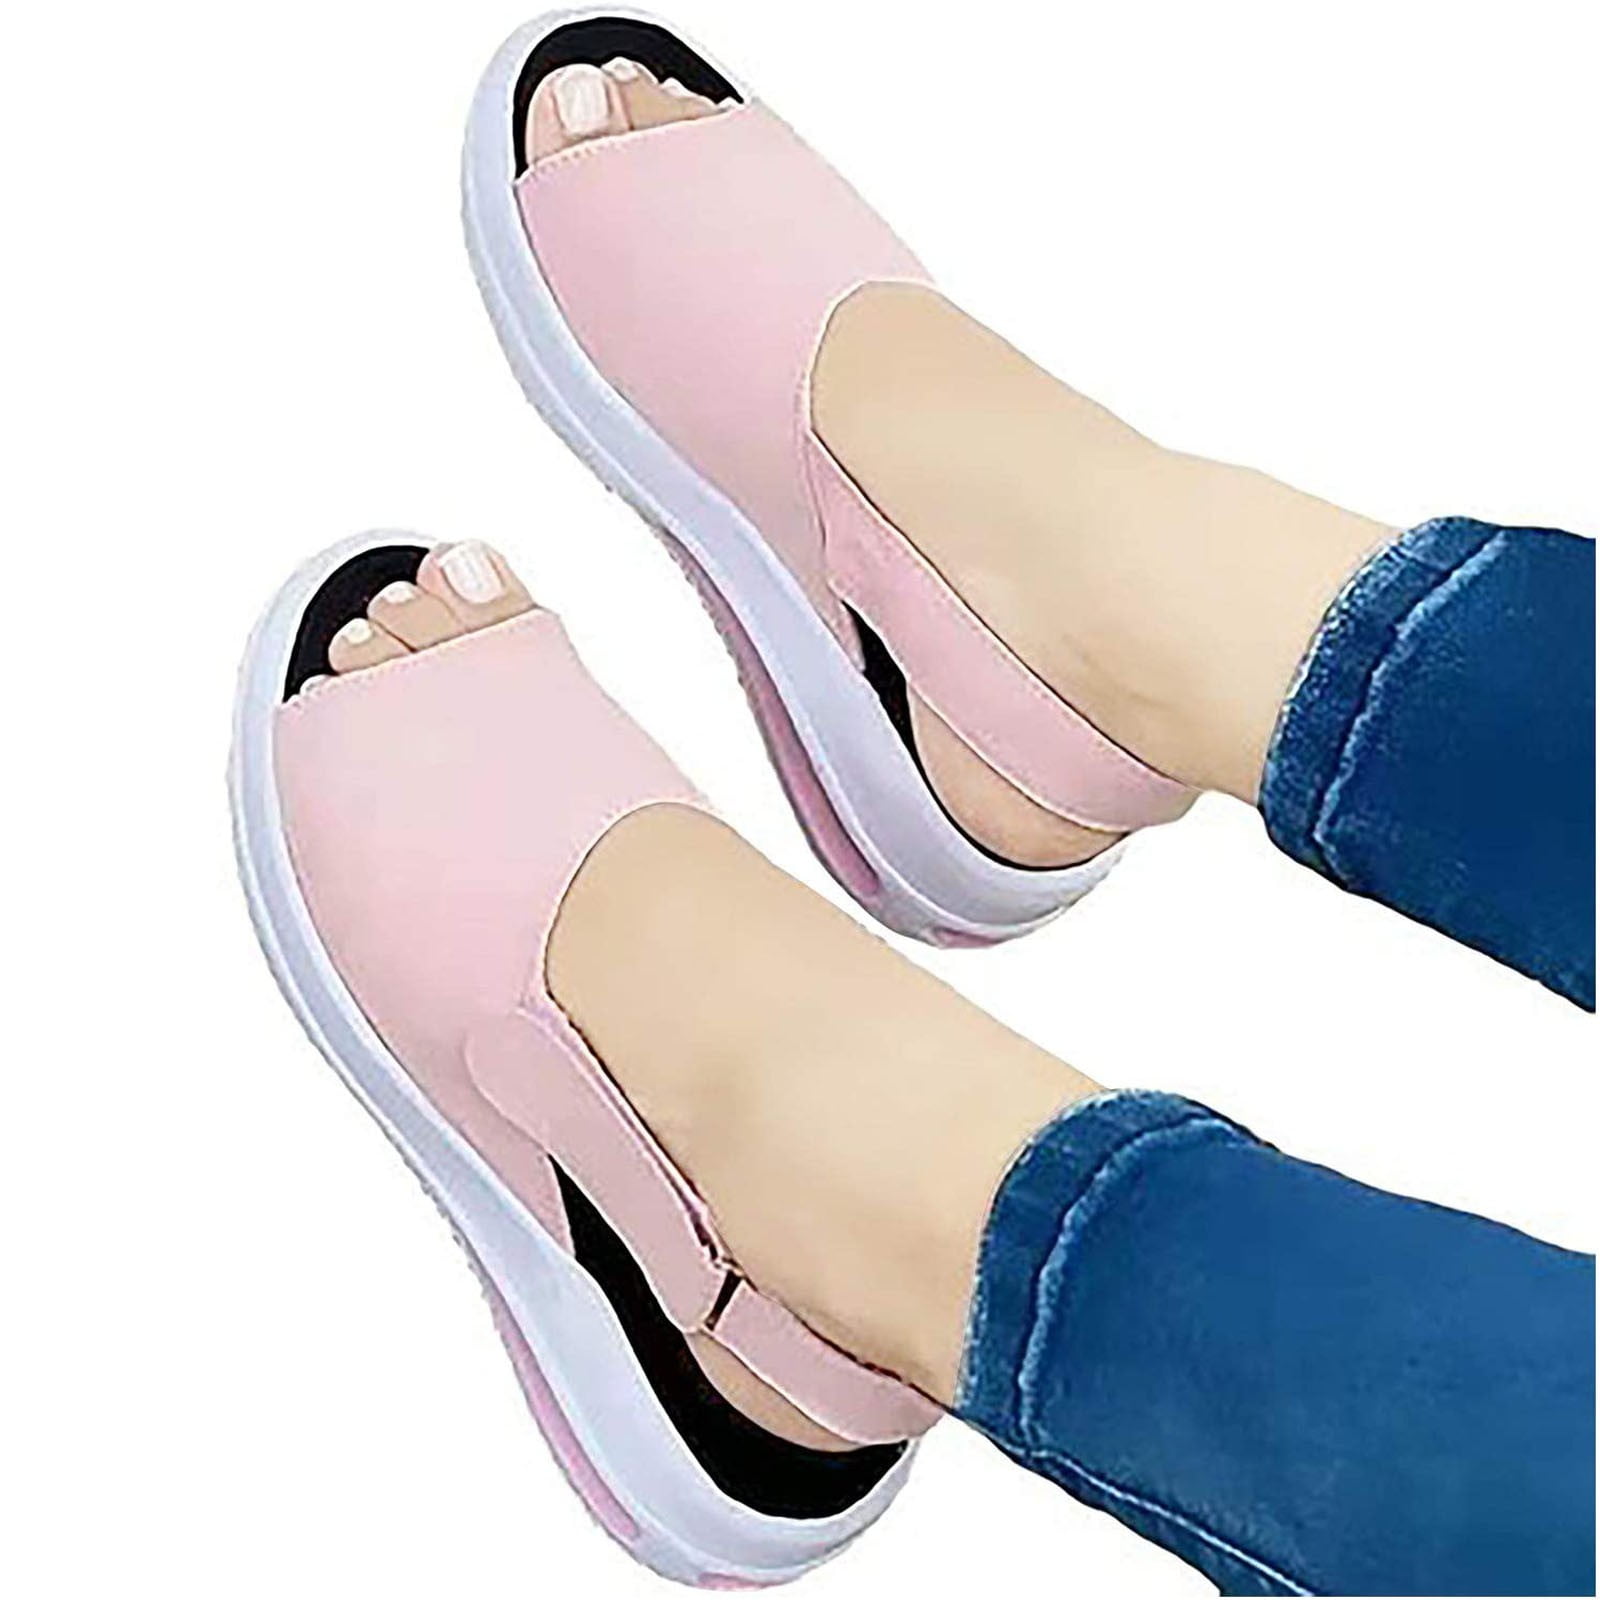 discount 84% Pink/Multicolored 22                  EU Cienta espadrilles KIDS FASHION Footwear Print 